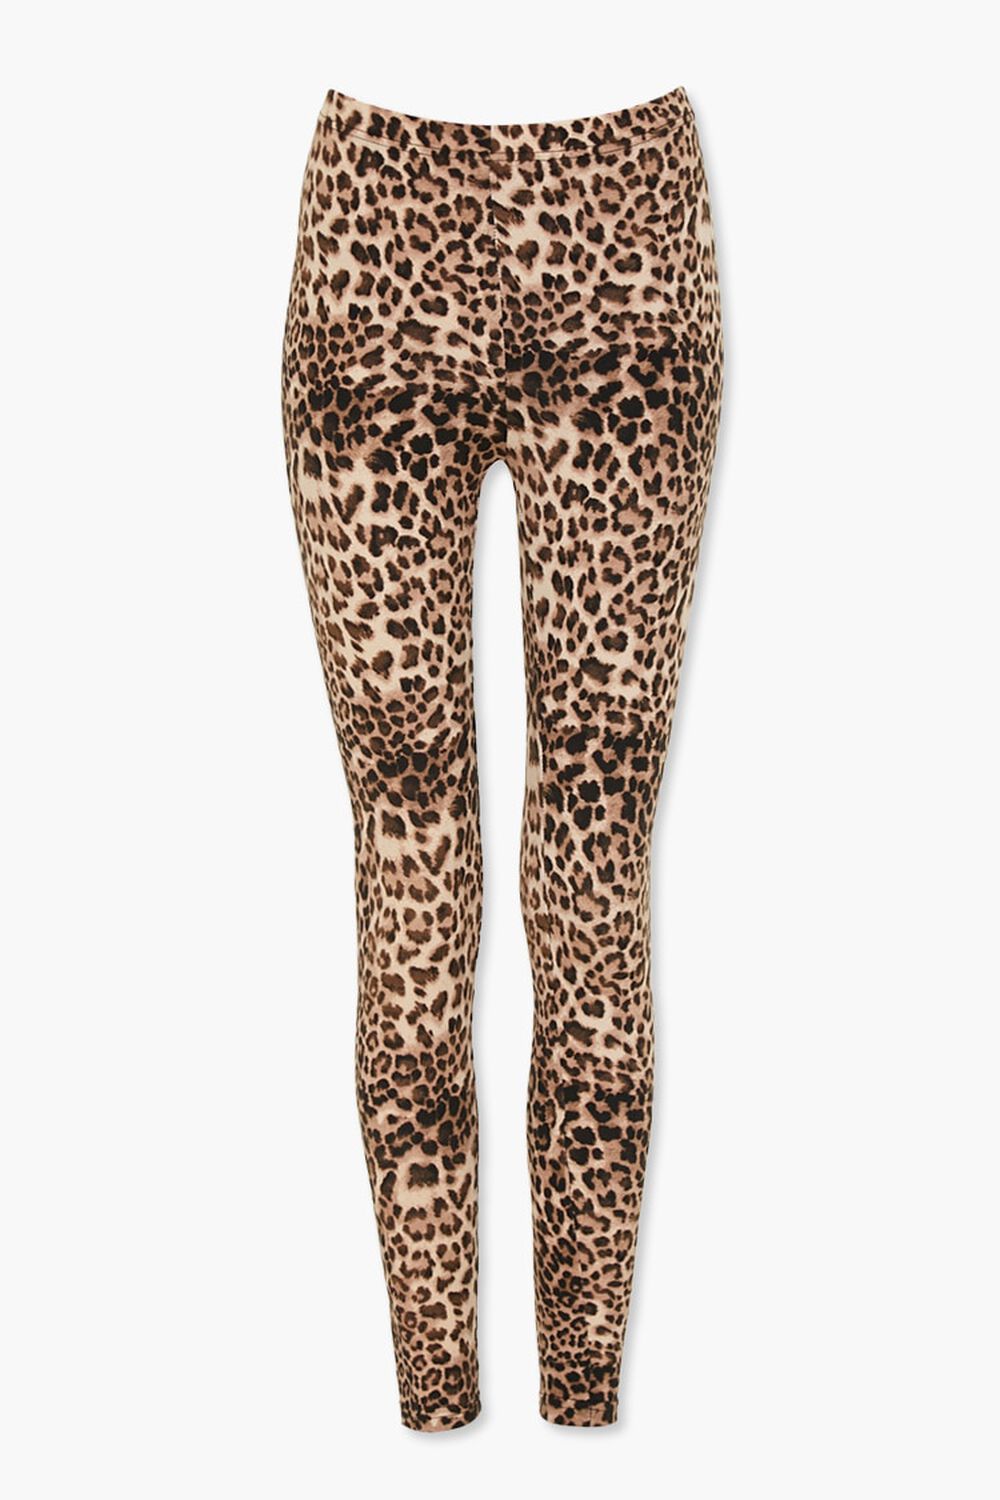 Leopard Print Leggings, image 1